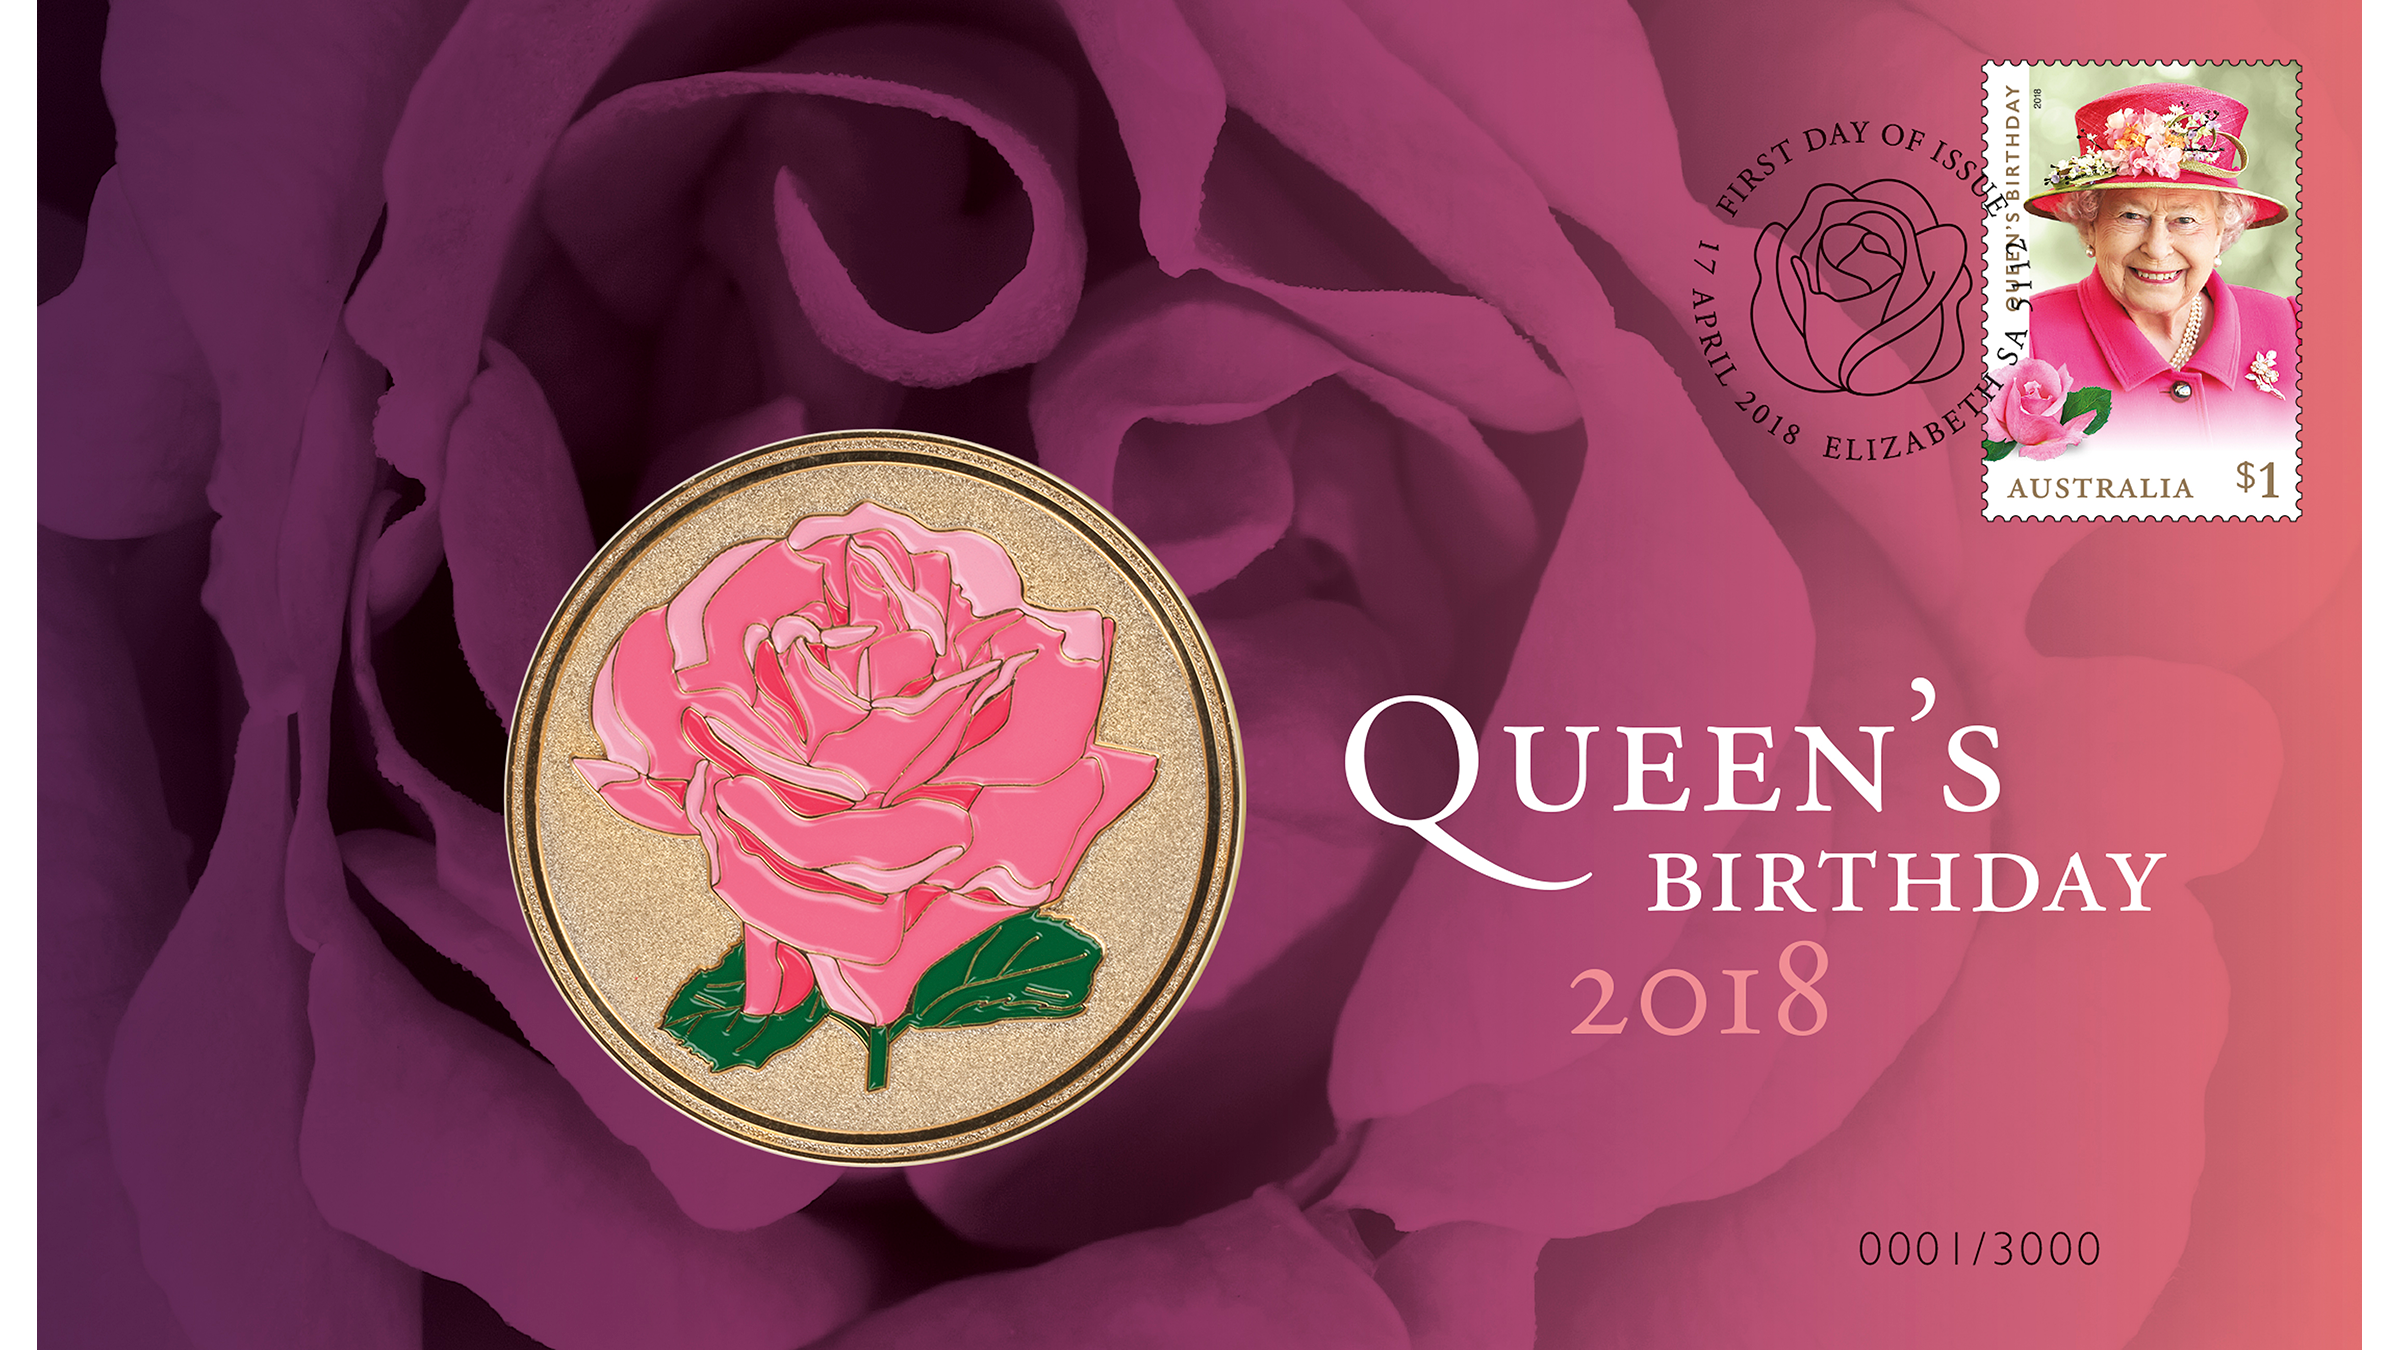 Высший свет. Галерея - Страница 19 Queens-birthday-2018-stamp-and-medallion-cover.png.auspostimage.0*0.169.medium